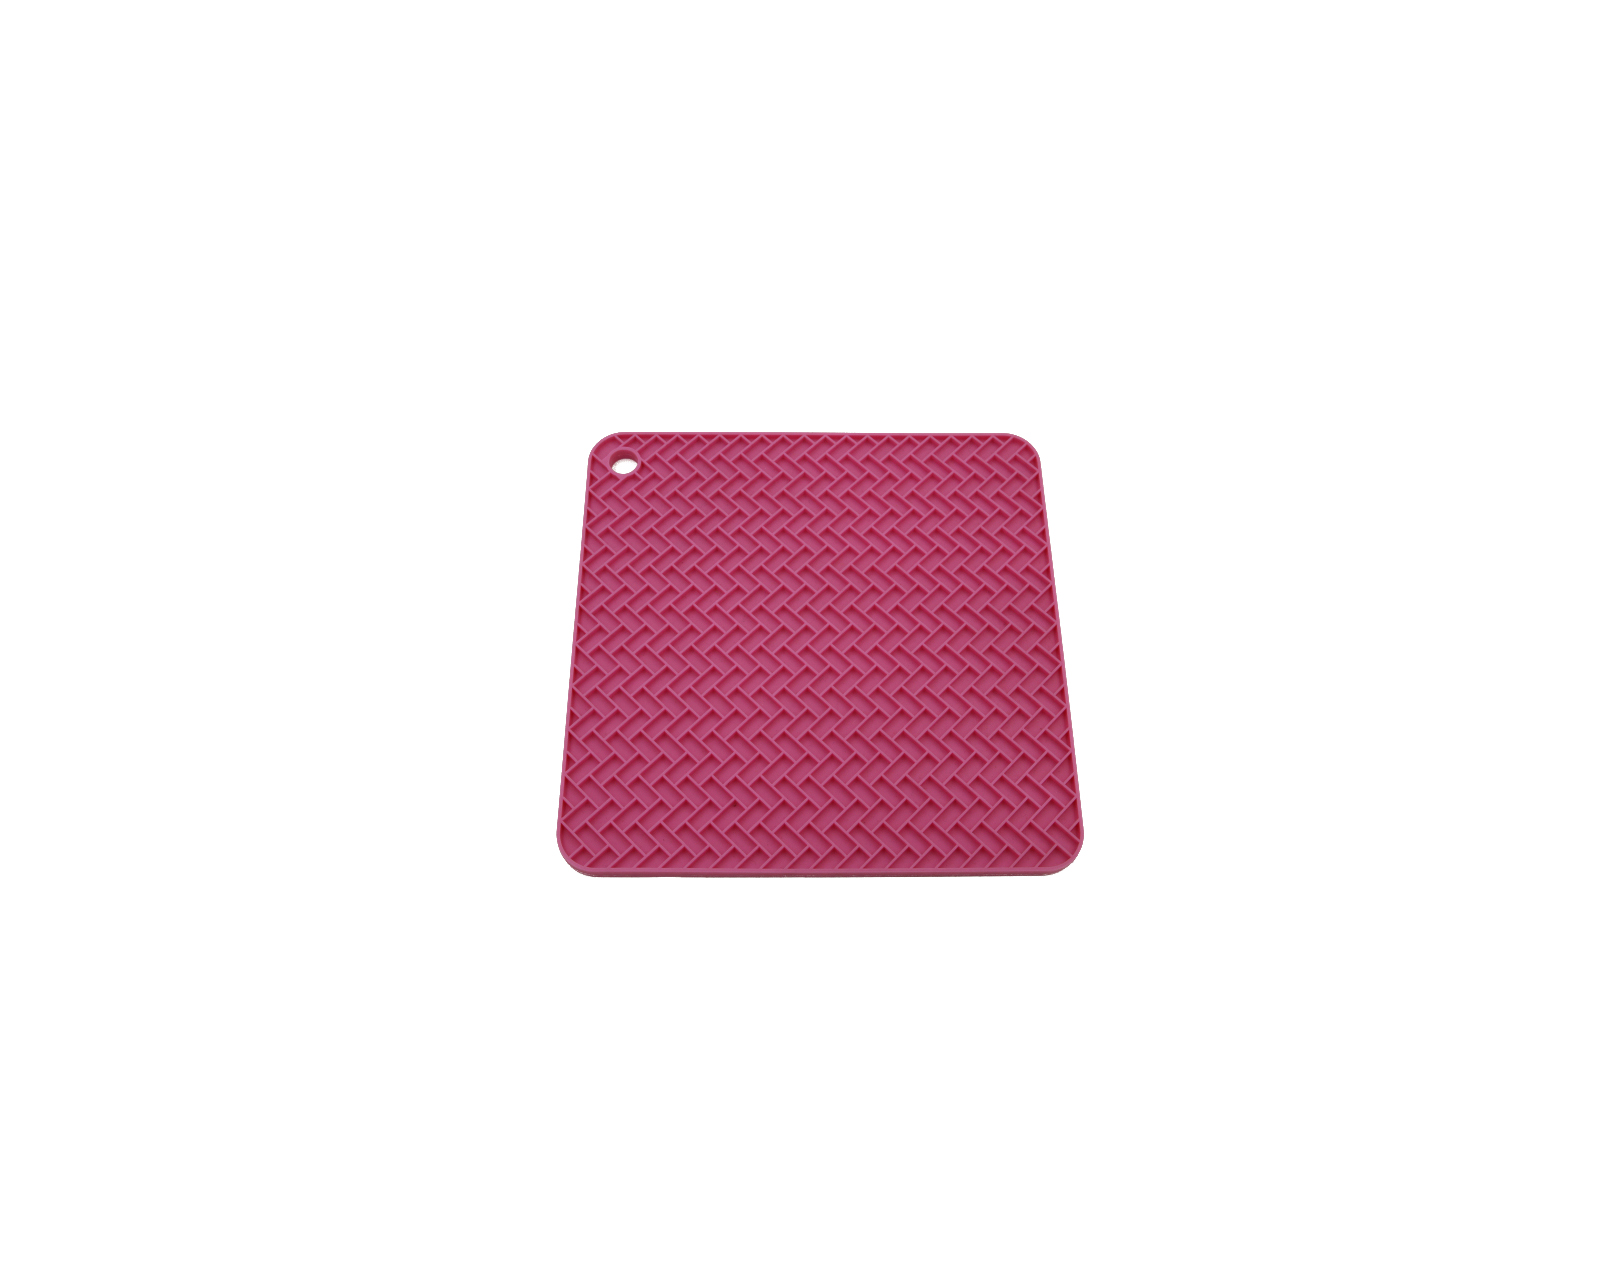 HI039 Quadratische Matte/Ofenhandschuh | Silikon Backmatte